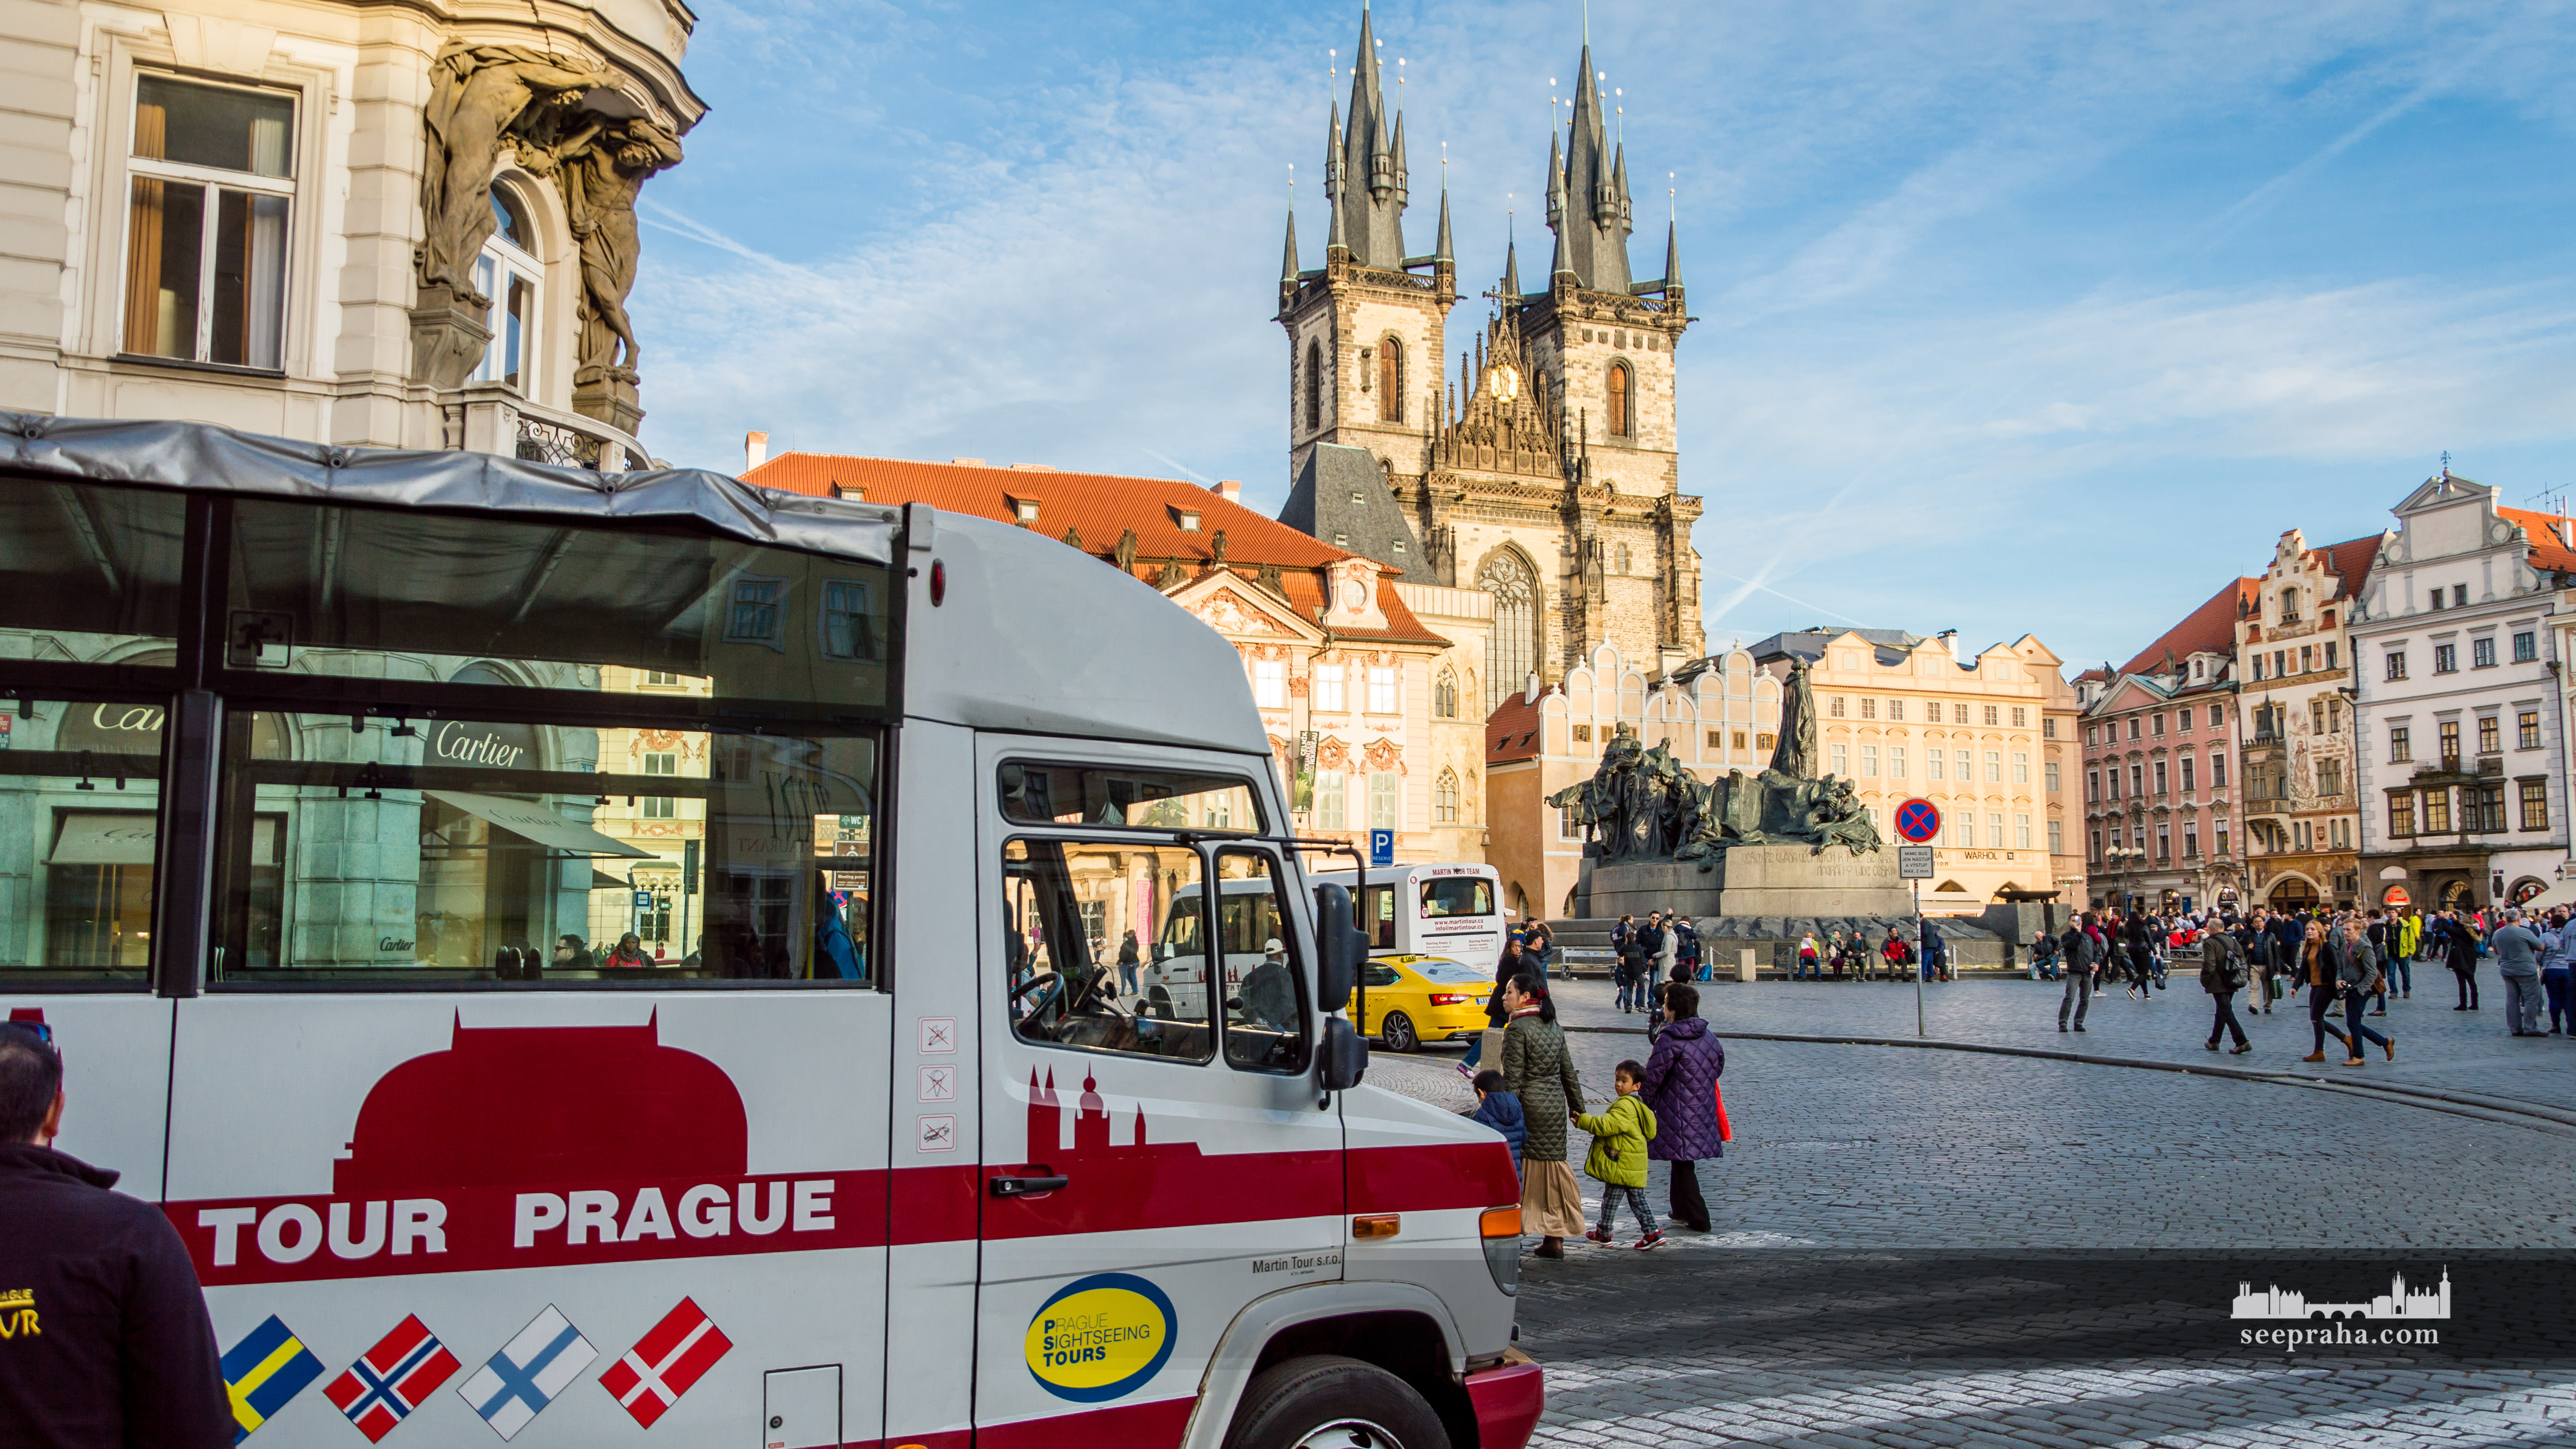 Tur prin oraș cu autocarul, Praga, Cehia